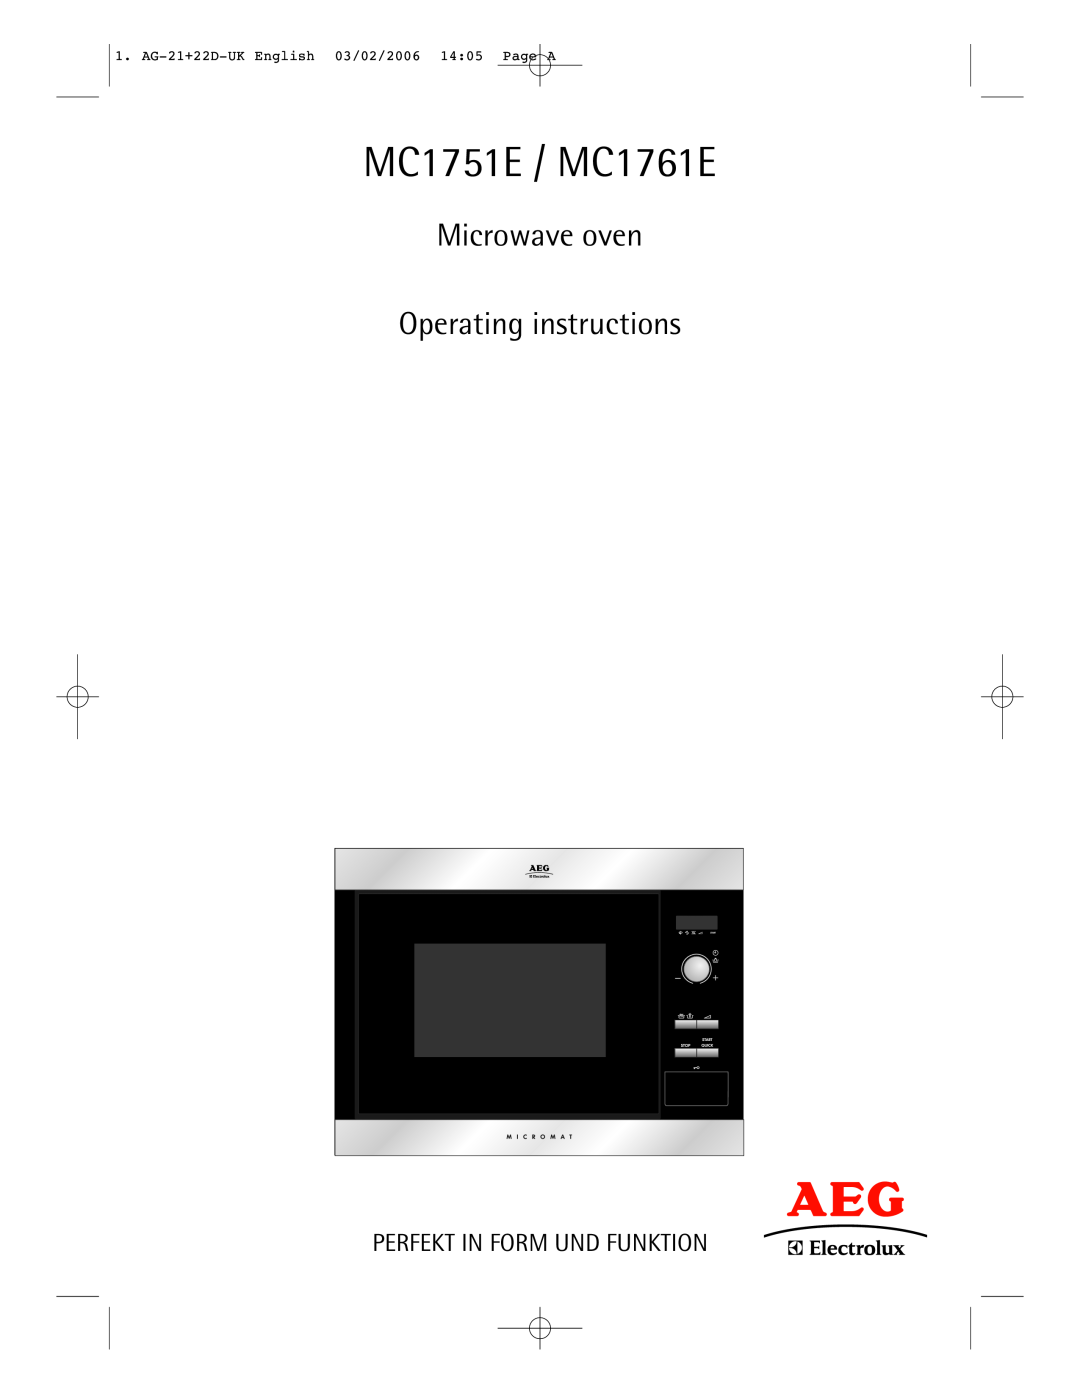 AEG operating instructions MC1751E / MC1761E, Microwave oven Operating instructions, Perfekt In Form Und Funktion 